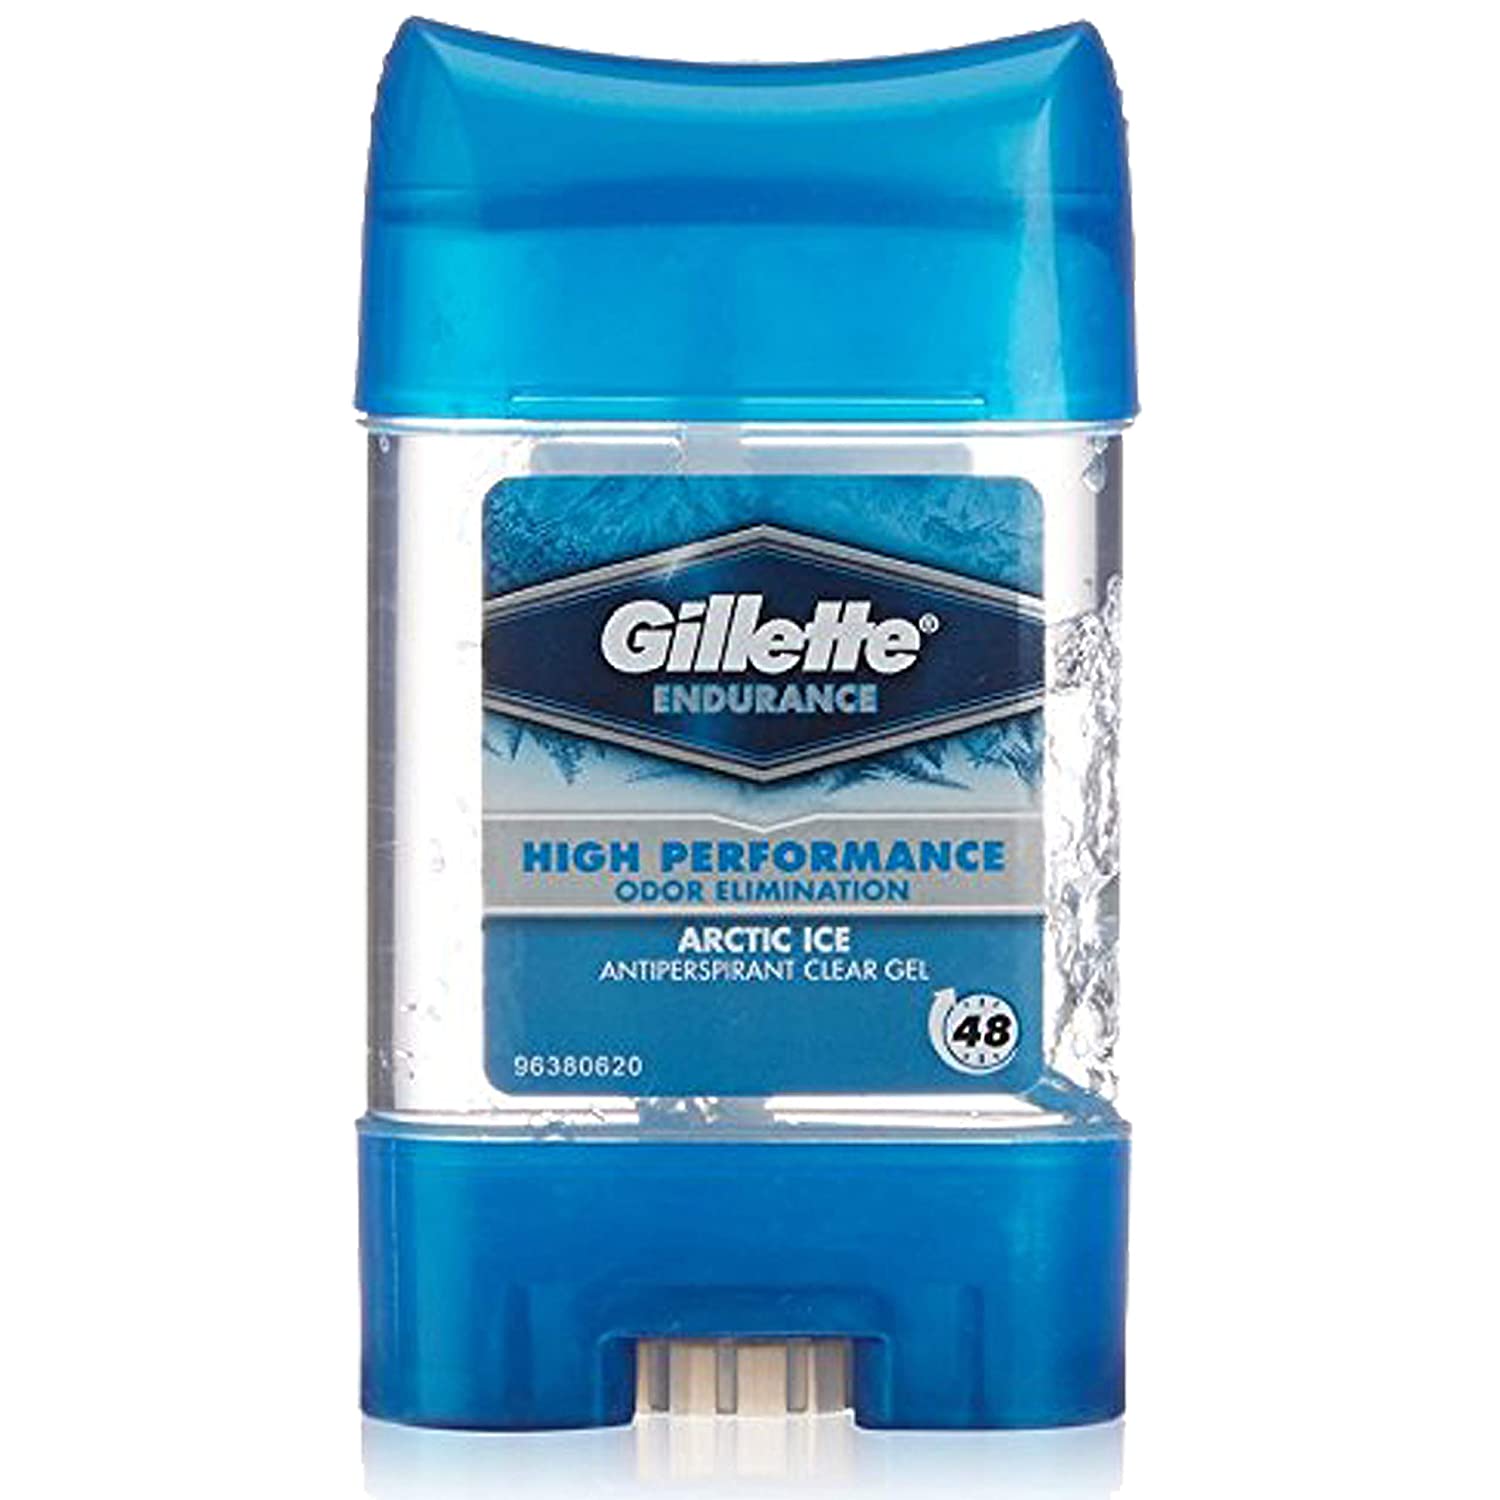 Gillette high perfomance deodorant artic ice gel 70 ml